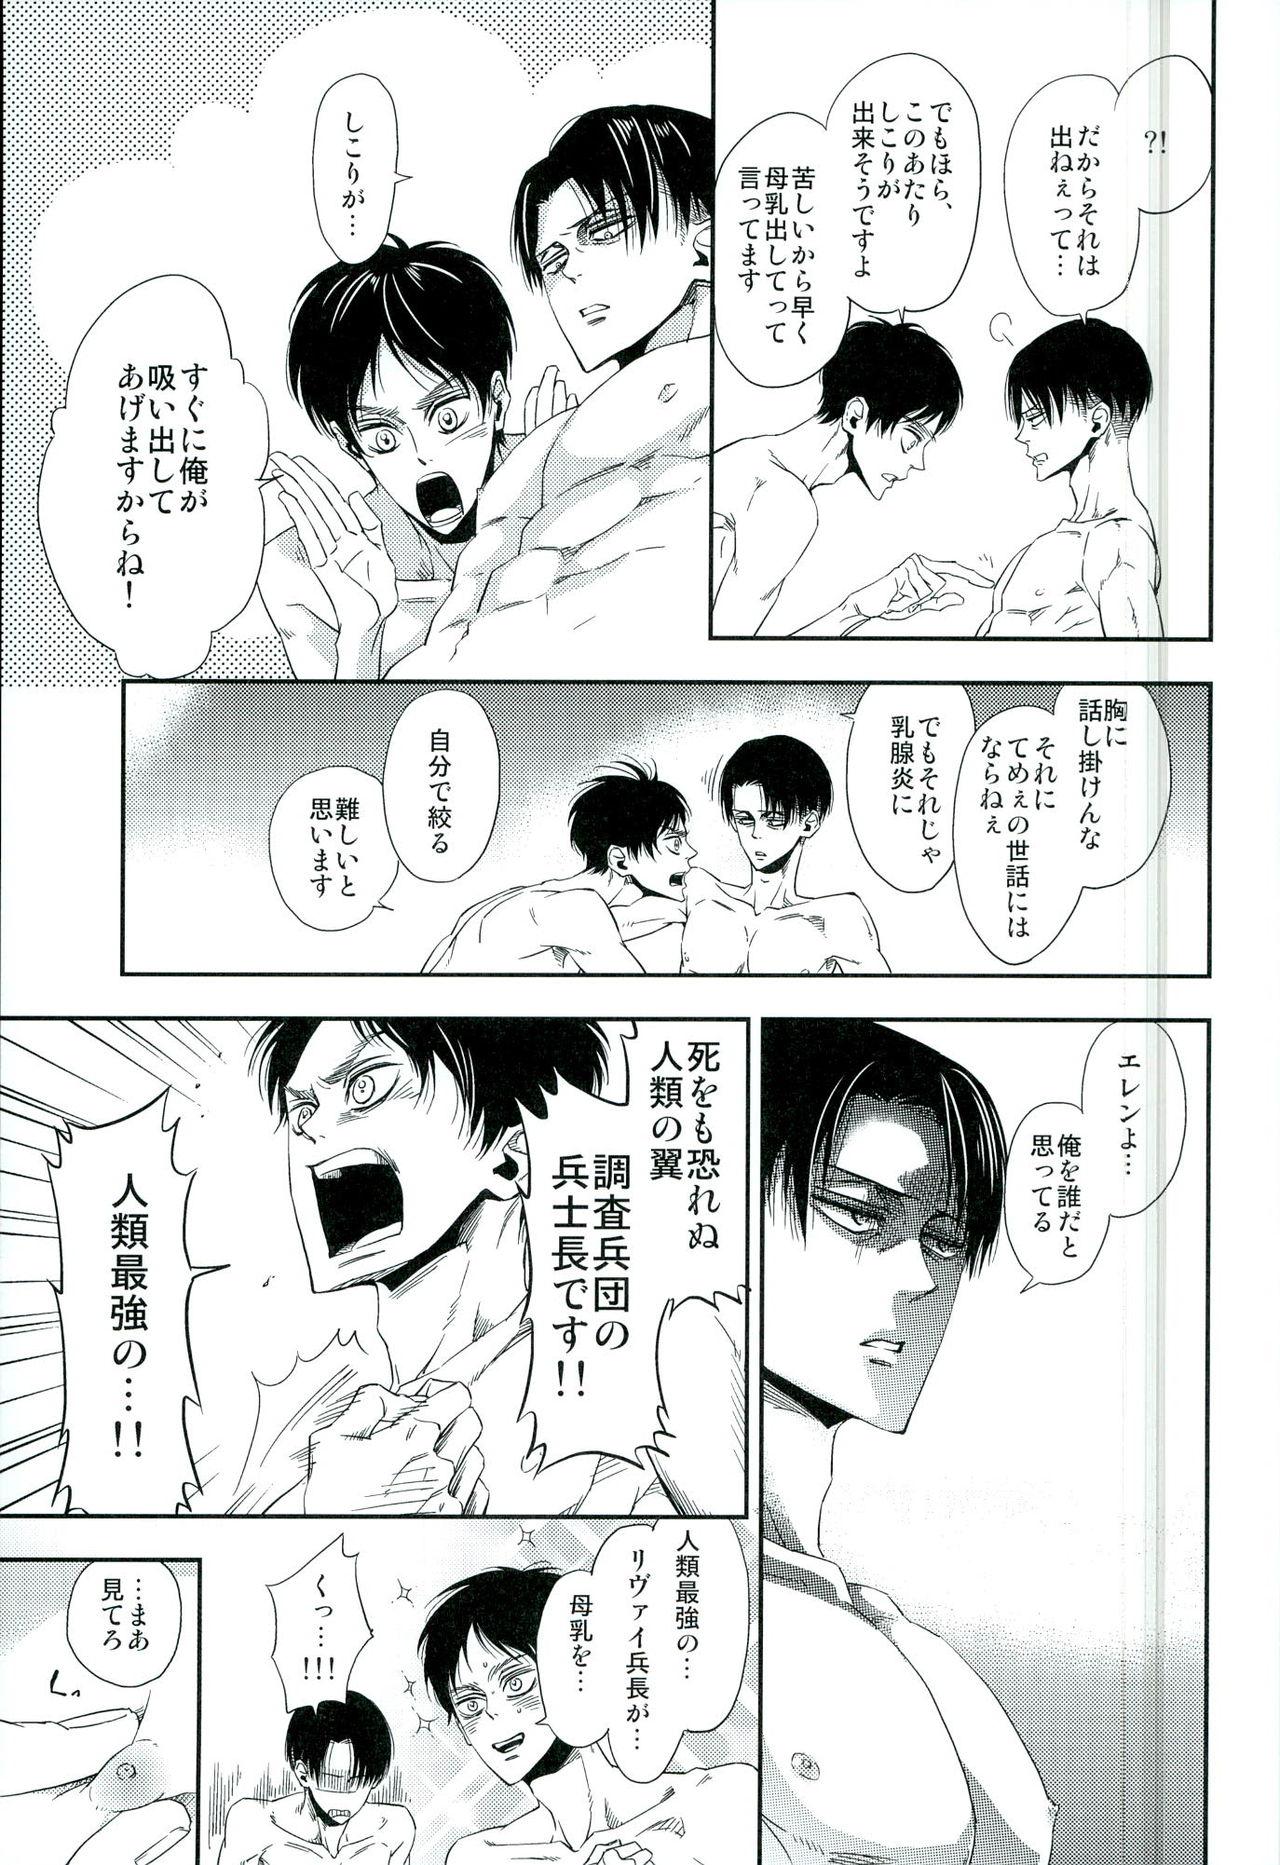 Freak 兵長のおっぱいから母乳が出るところが見たい! - Shingeki no kyojin Outdoor Sex - Page 8